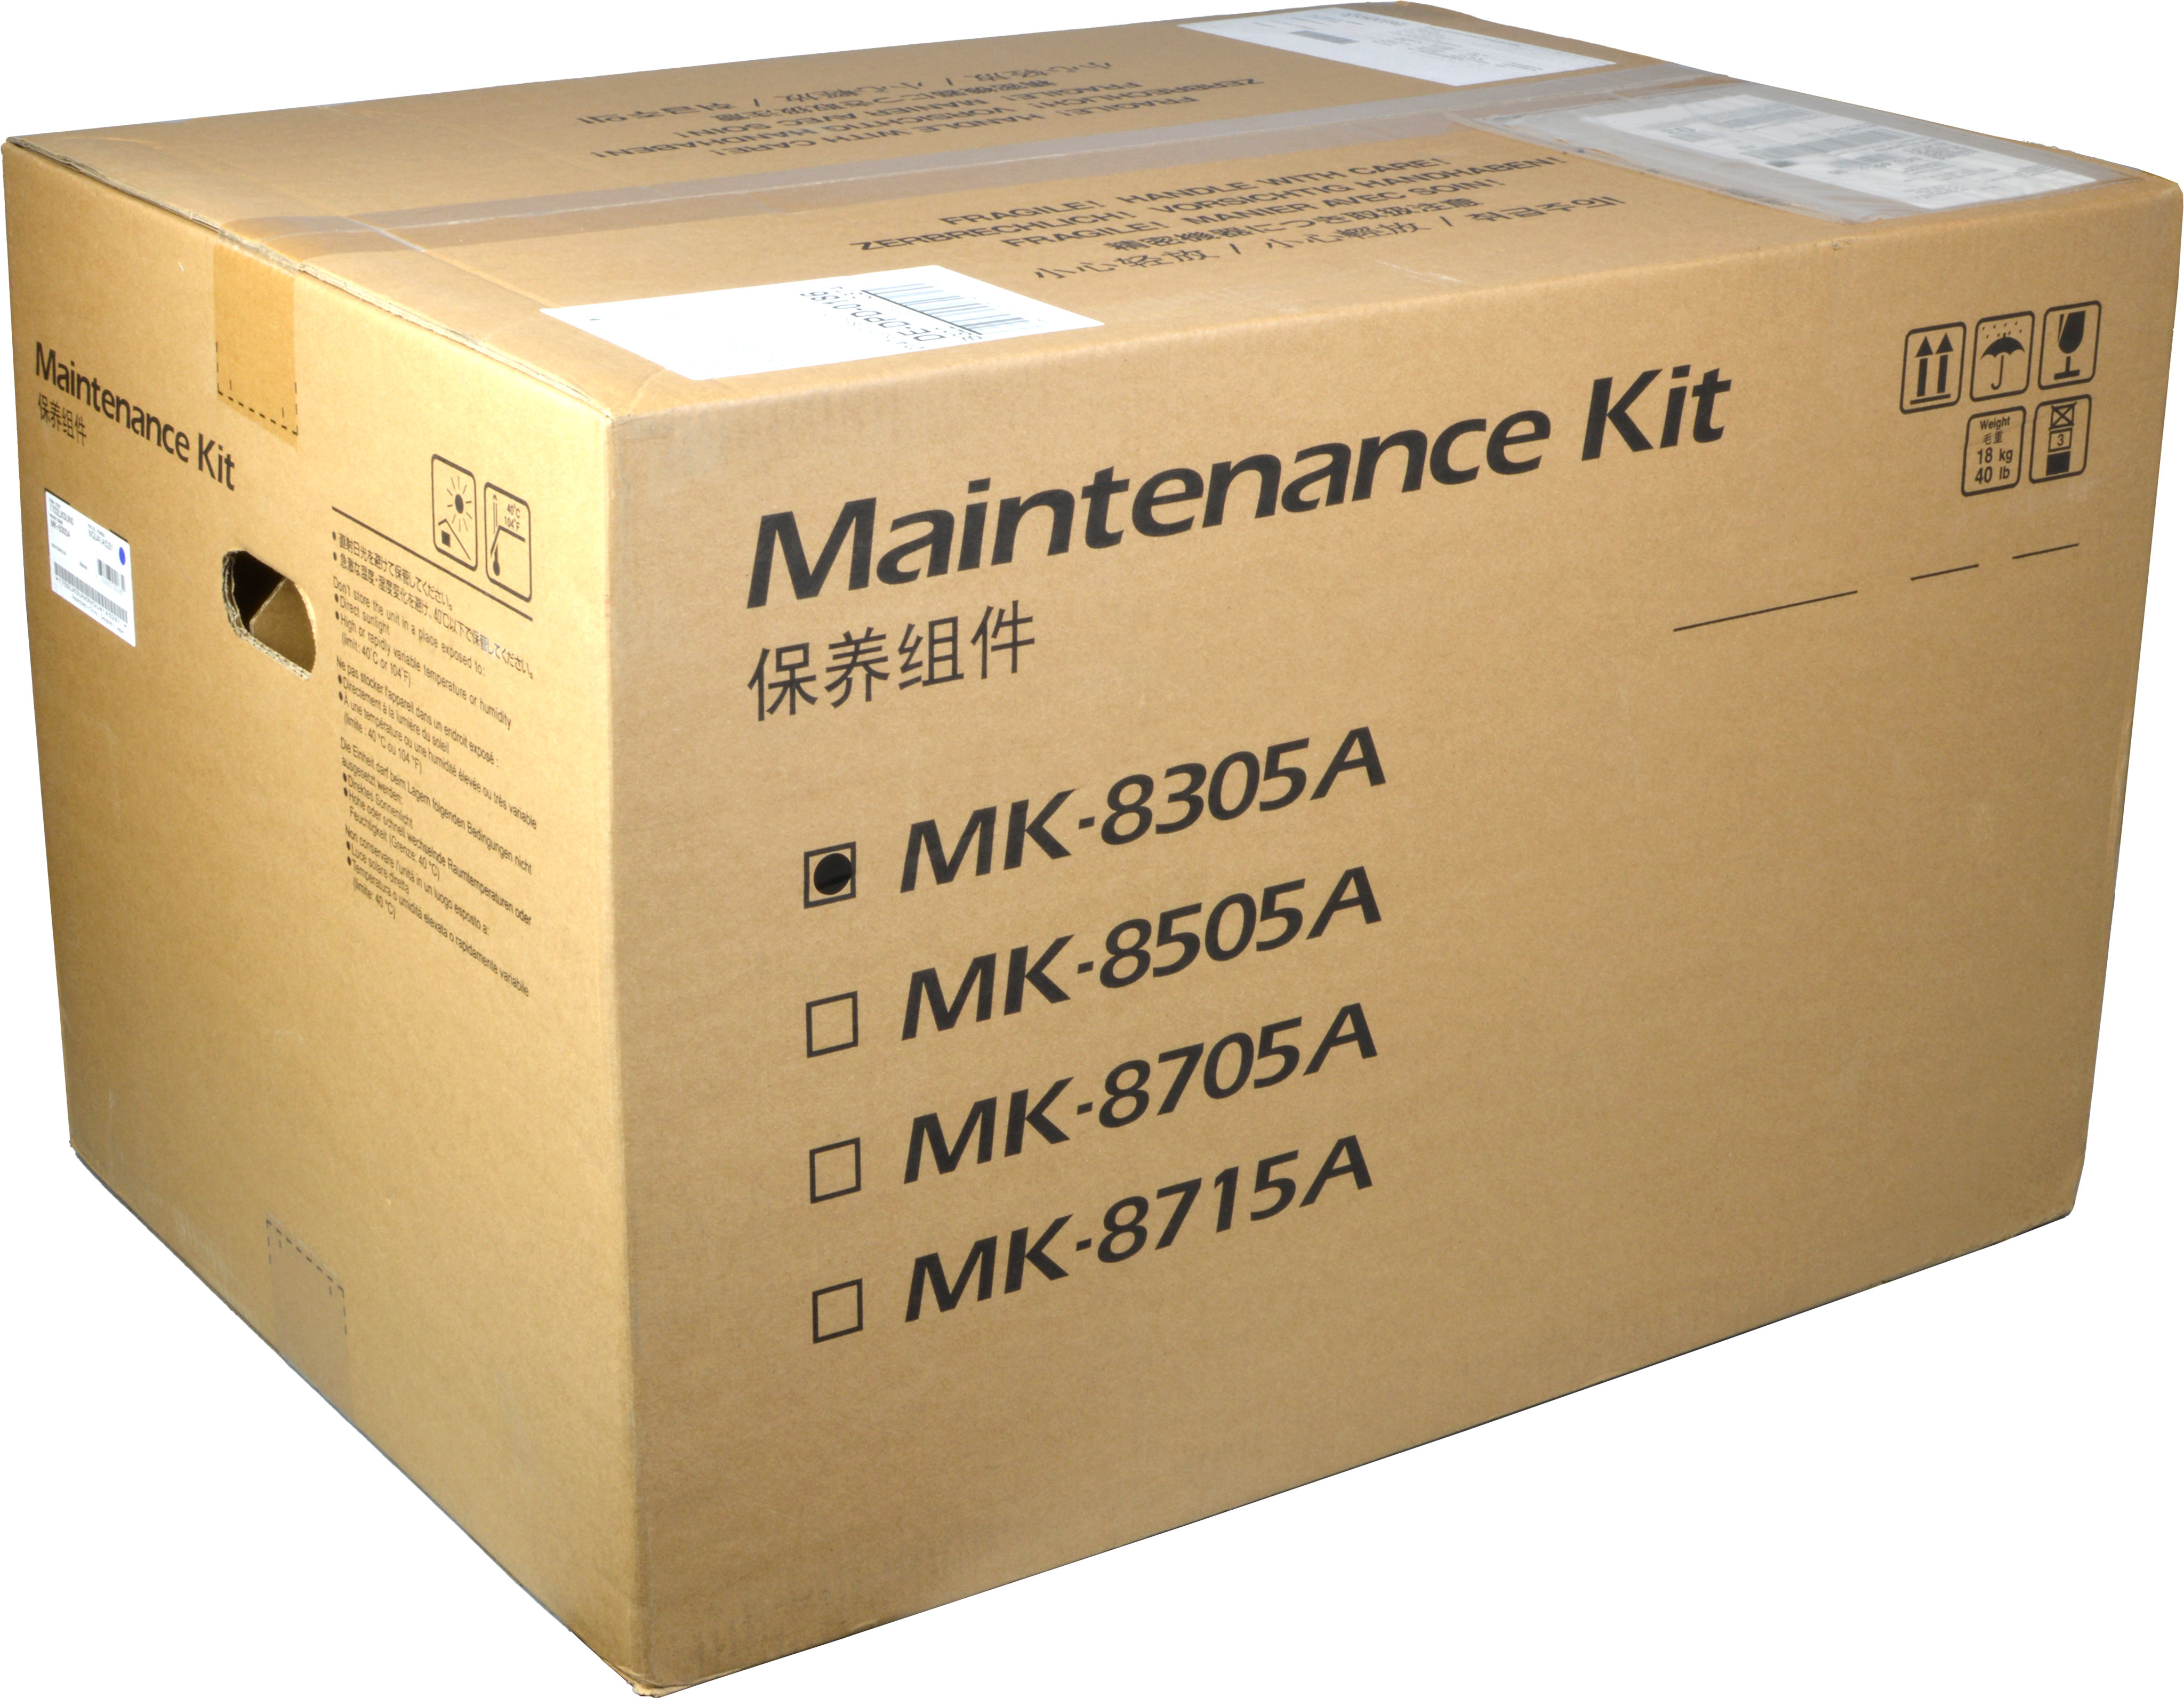 Kyocera Maintenance Kit MK-8305A  1702LK0UN0  schwarz